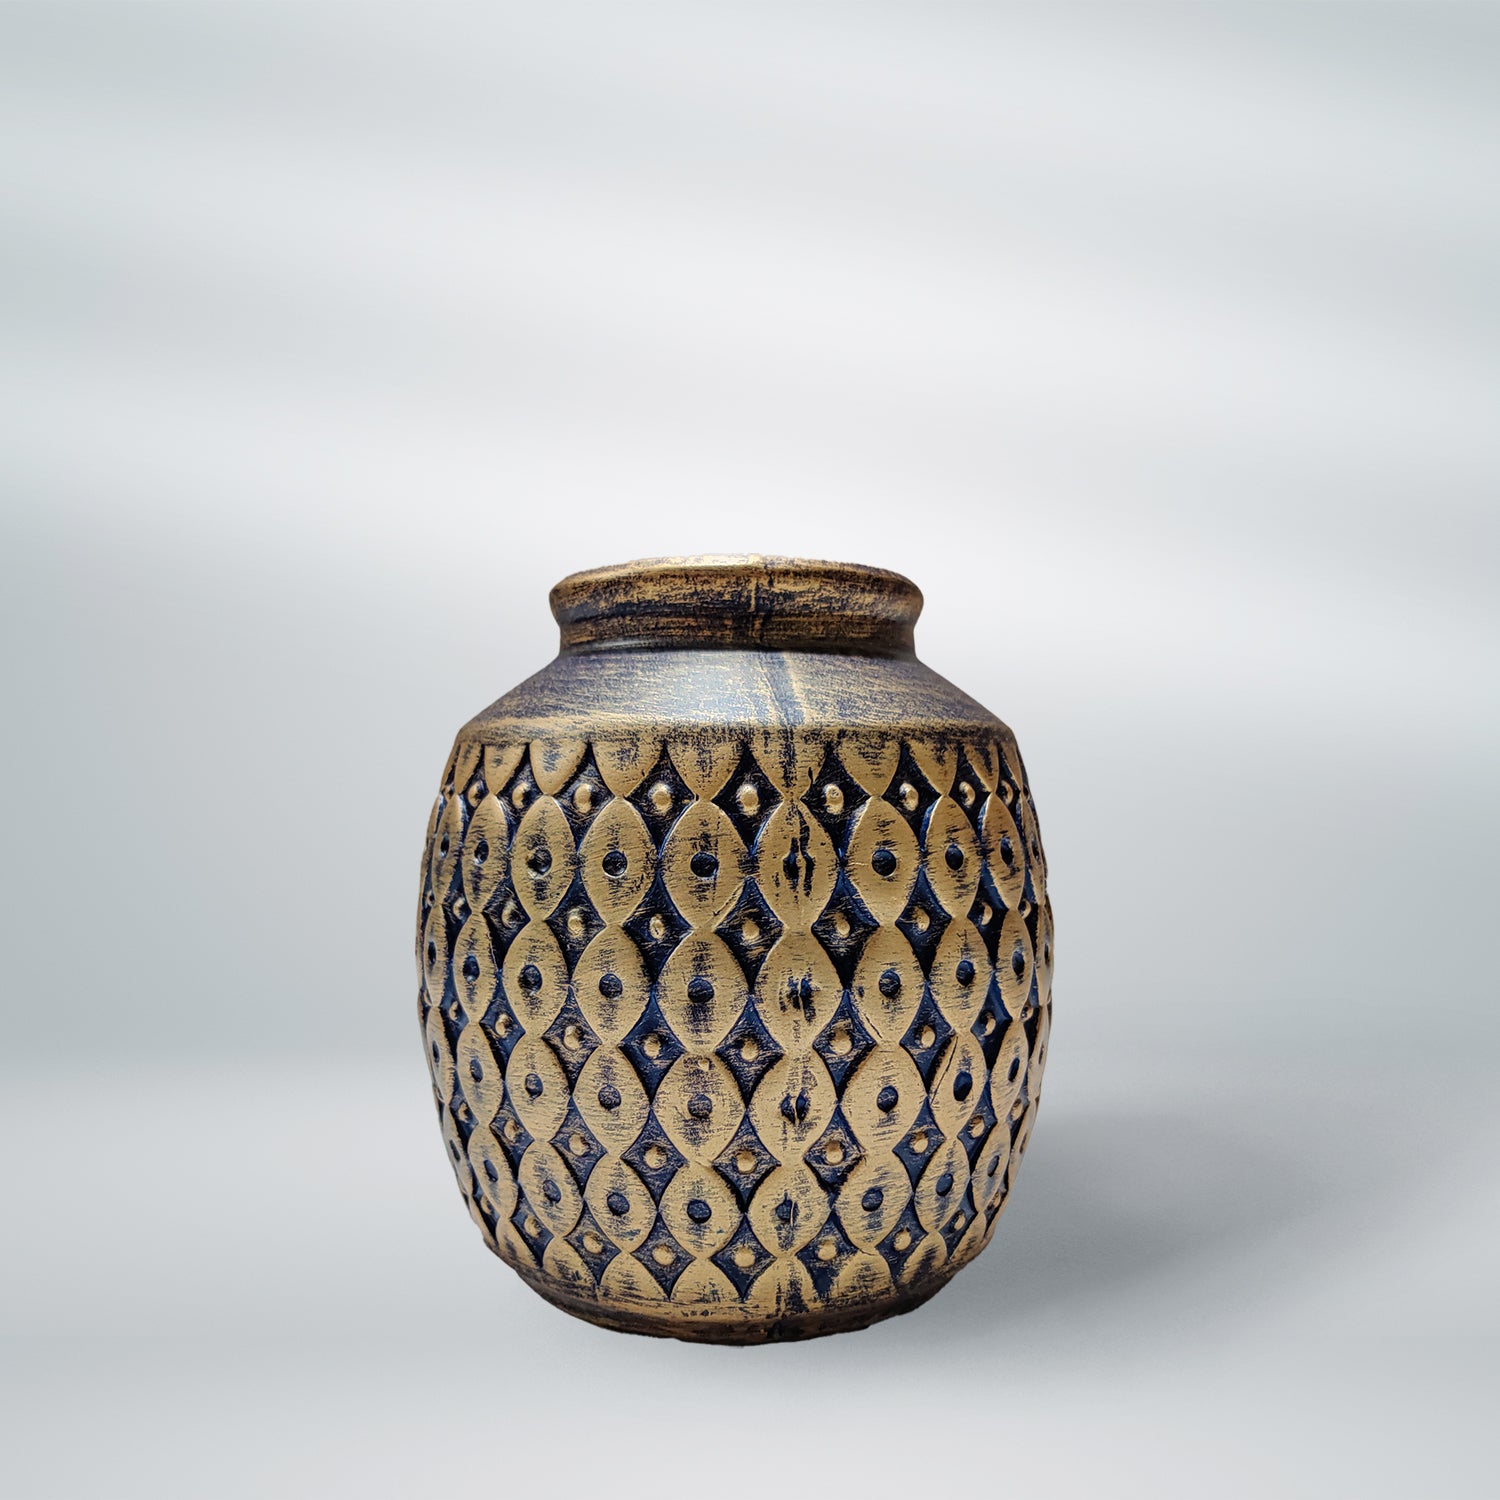 Culture Charm Golden Ceramic Decorative Vase/Pot - 7 inches x 6 inches